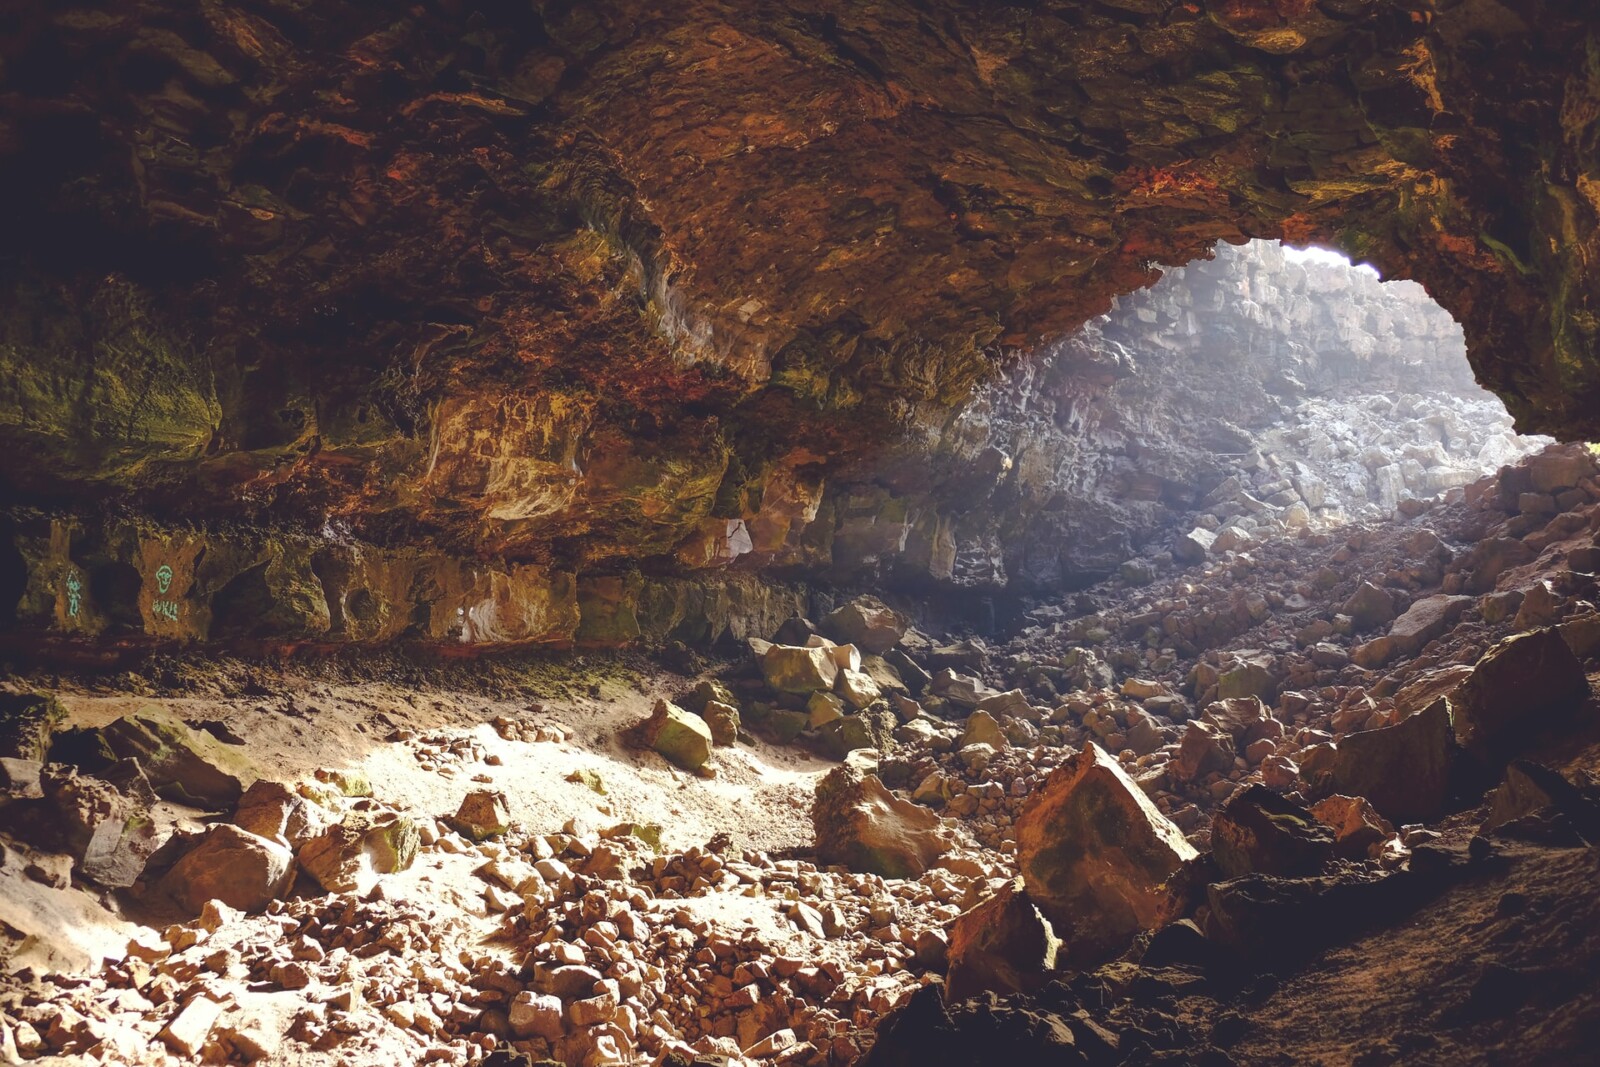 Andirilena cave